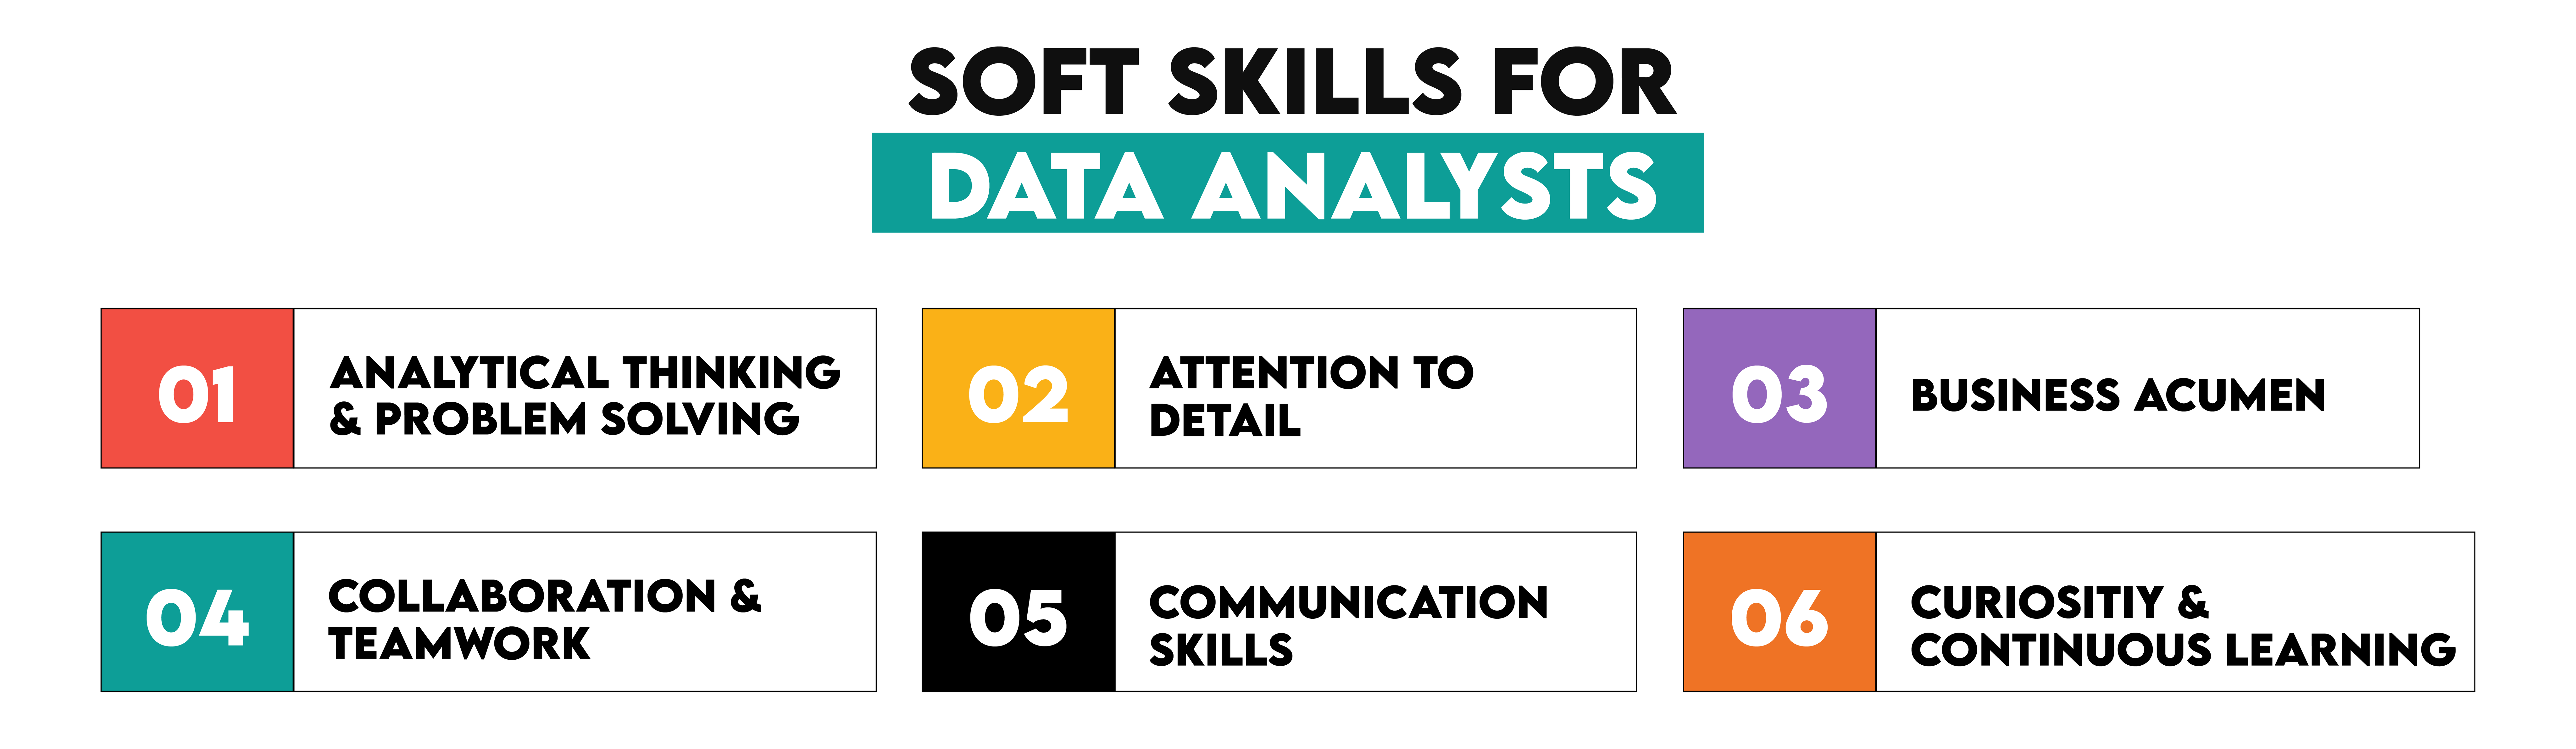 Soft Skills for Data Analysts